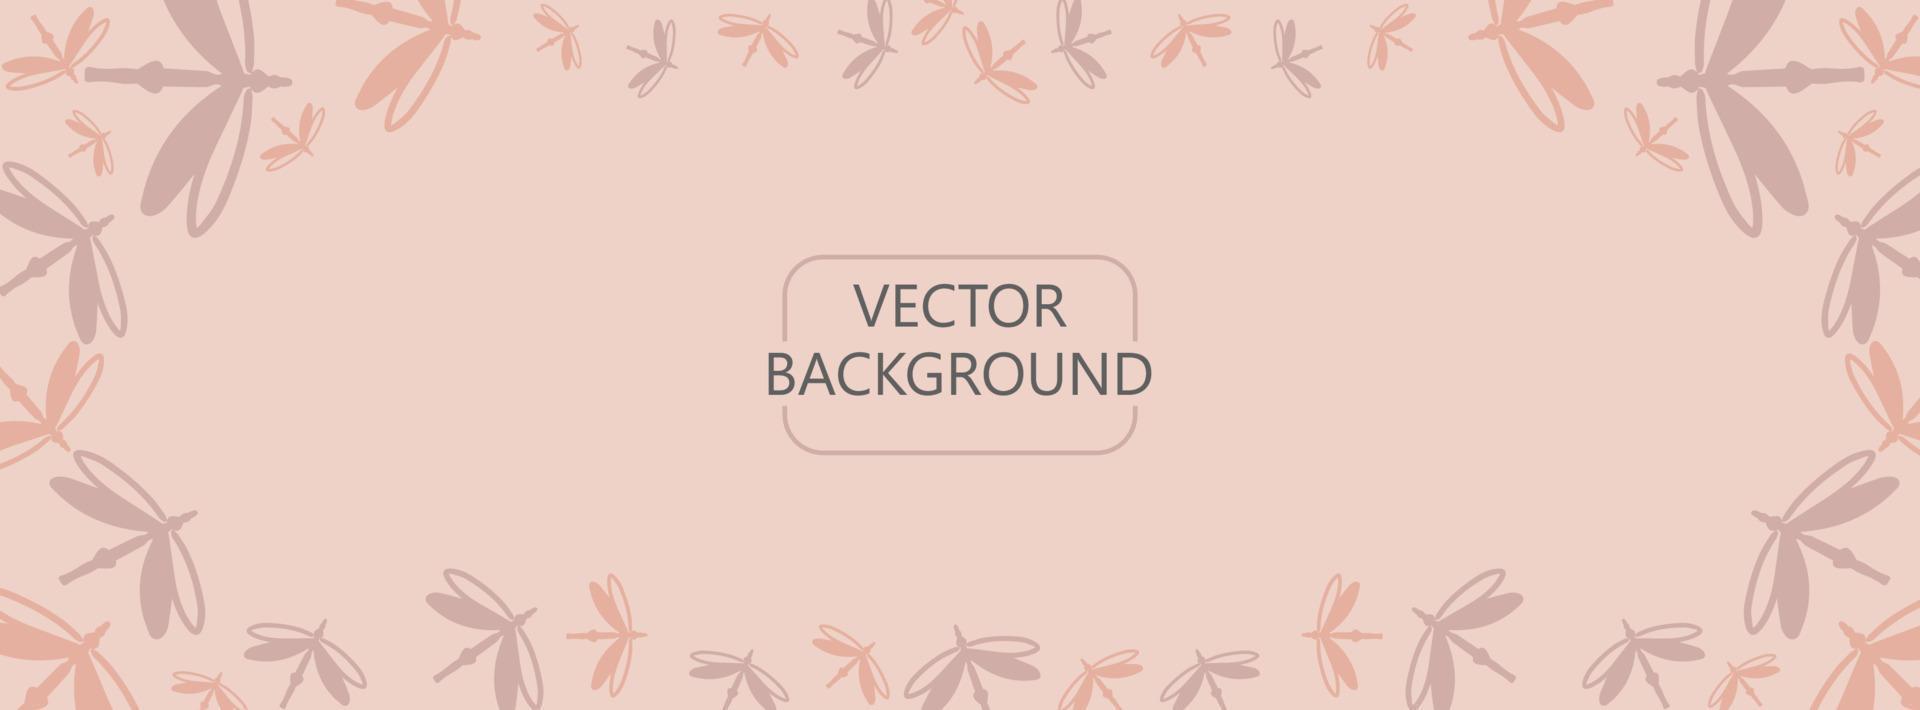 horizontaler hintergrund mit libellenschattenbild-vektorillustration vektor